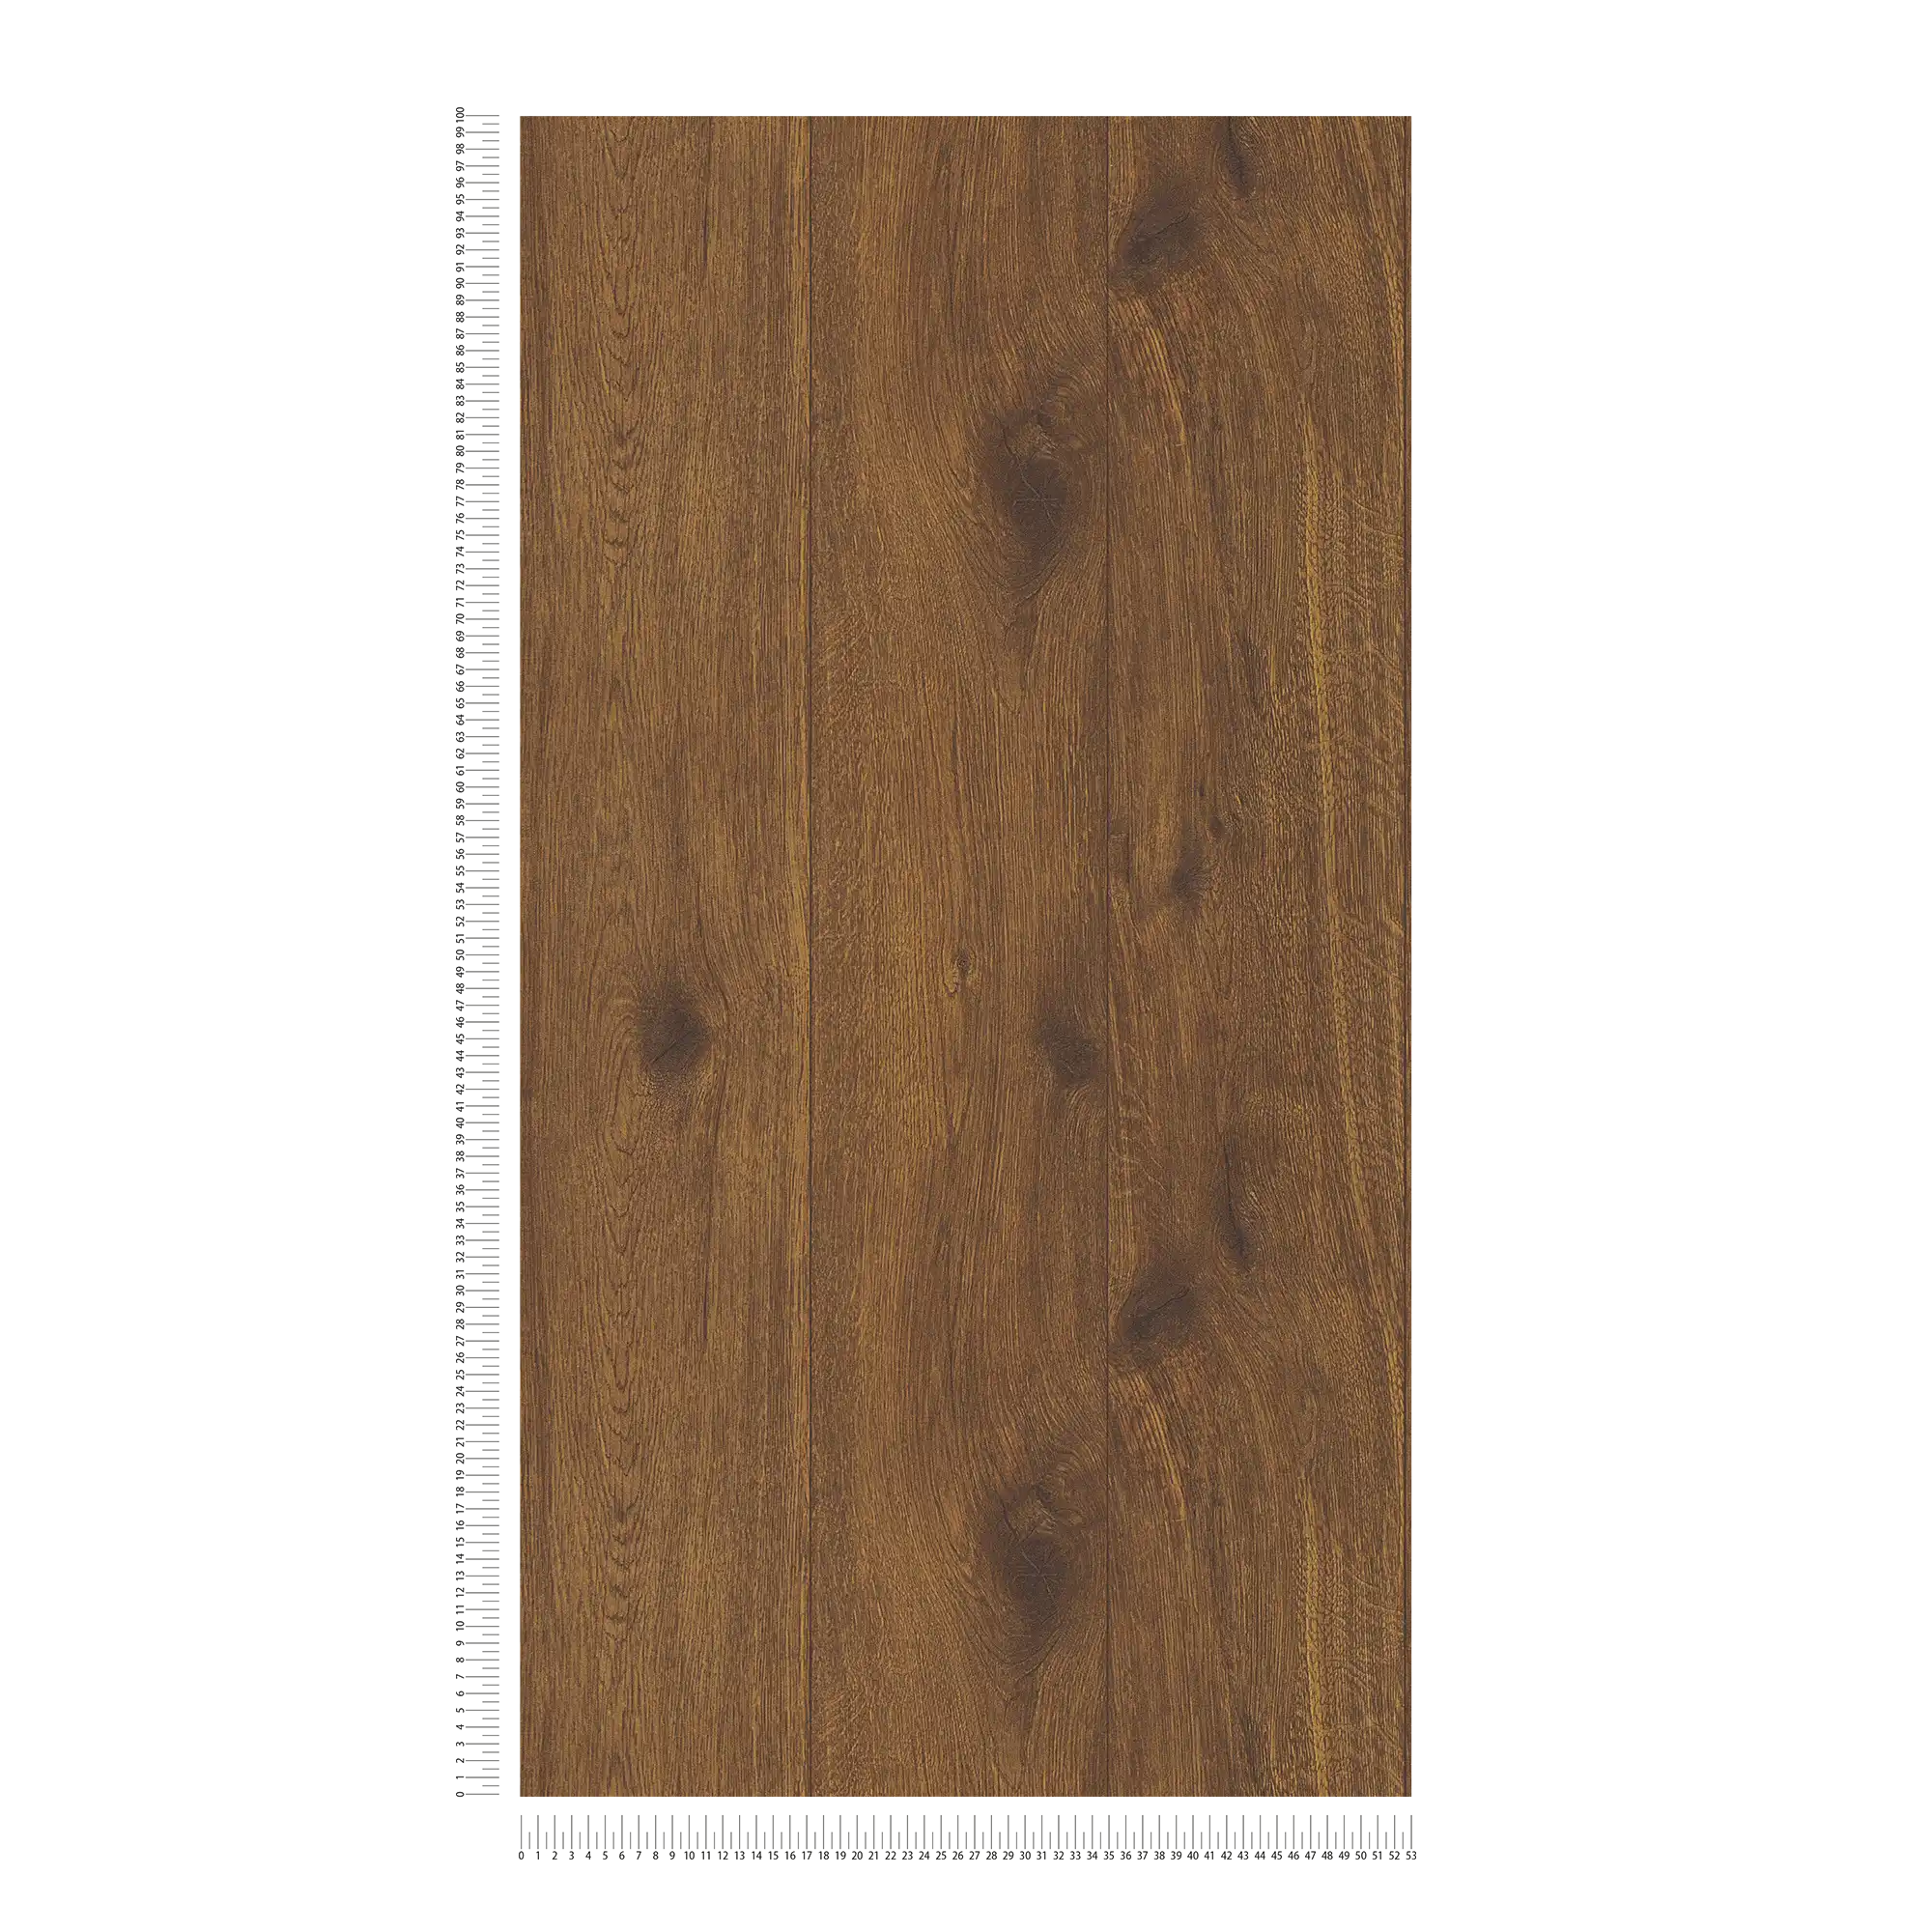             Wood look wallpaper with natural wood grain - brown
        